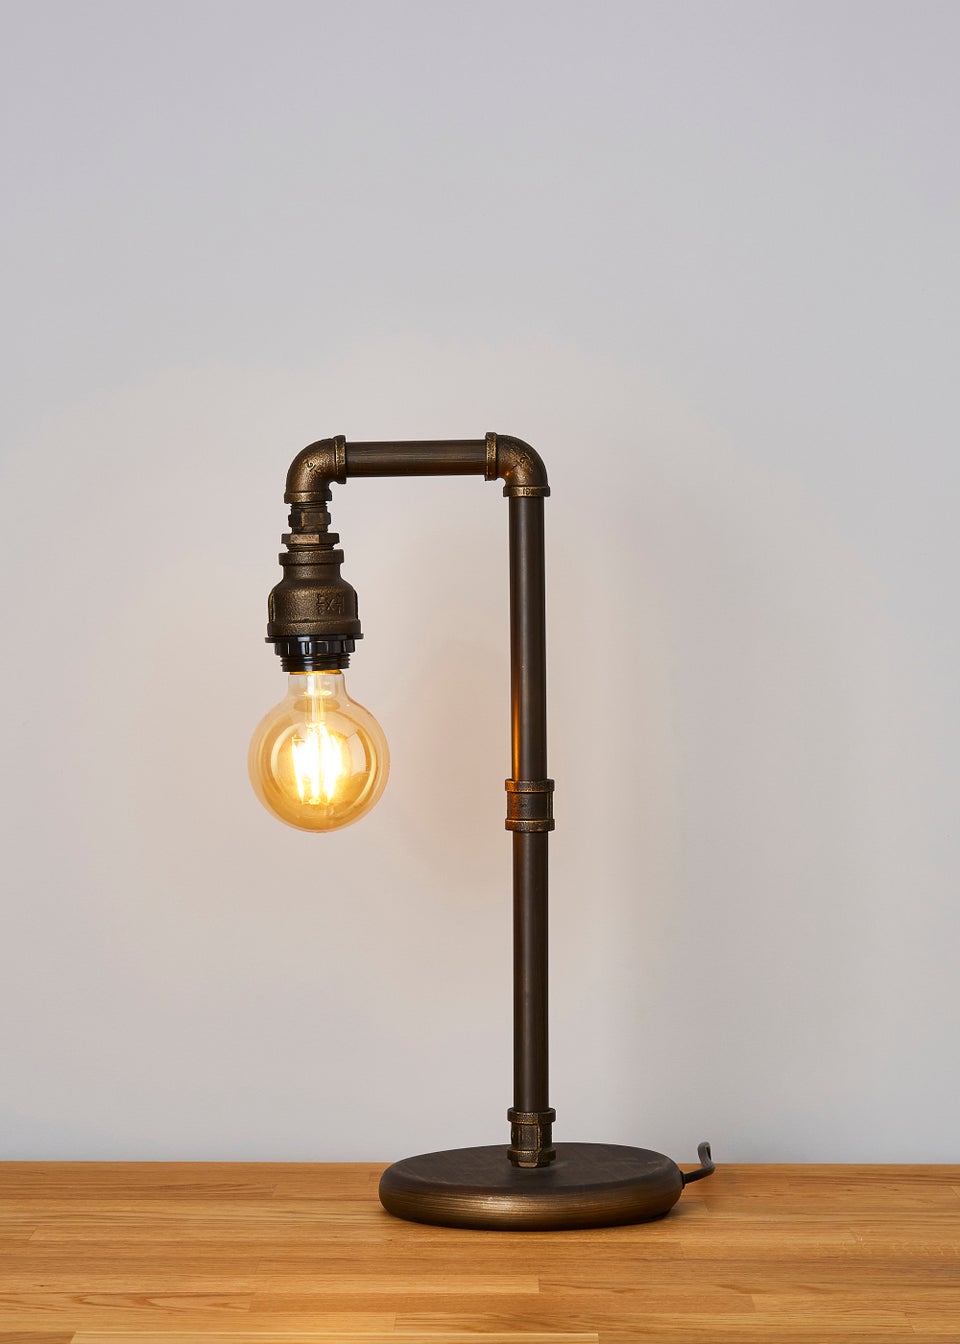 Inlight Industrial Pipe Table Lamp (43cm x 23cm x 15cm)